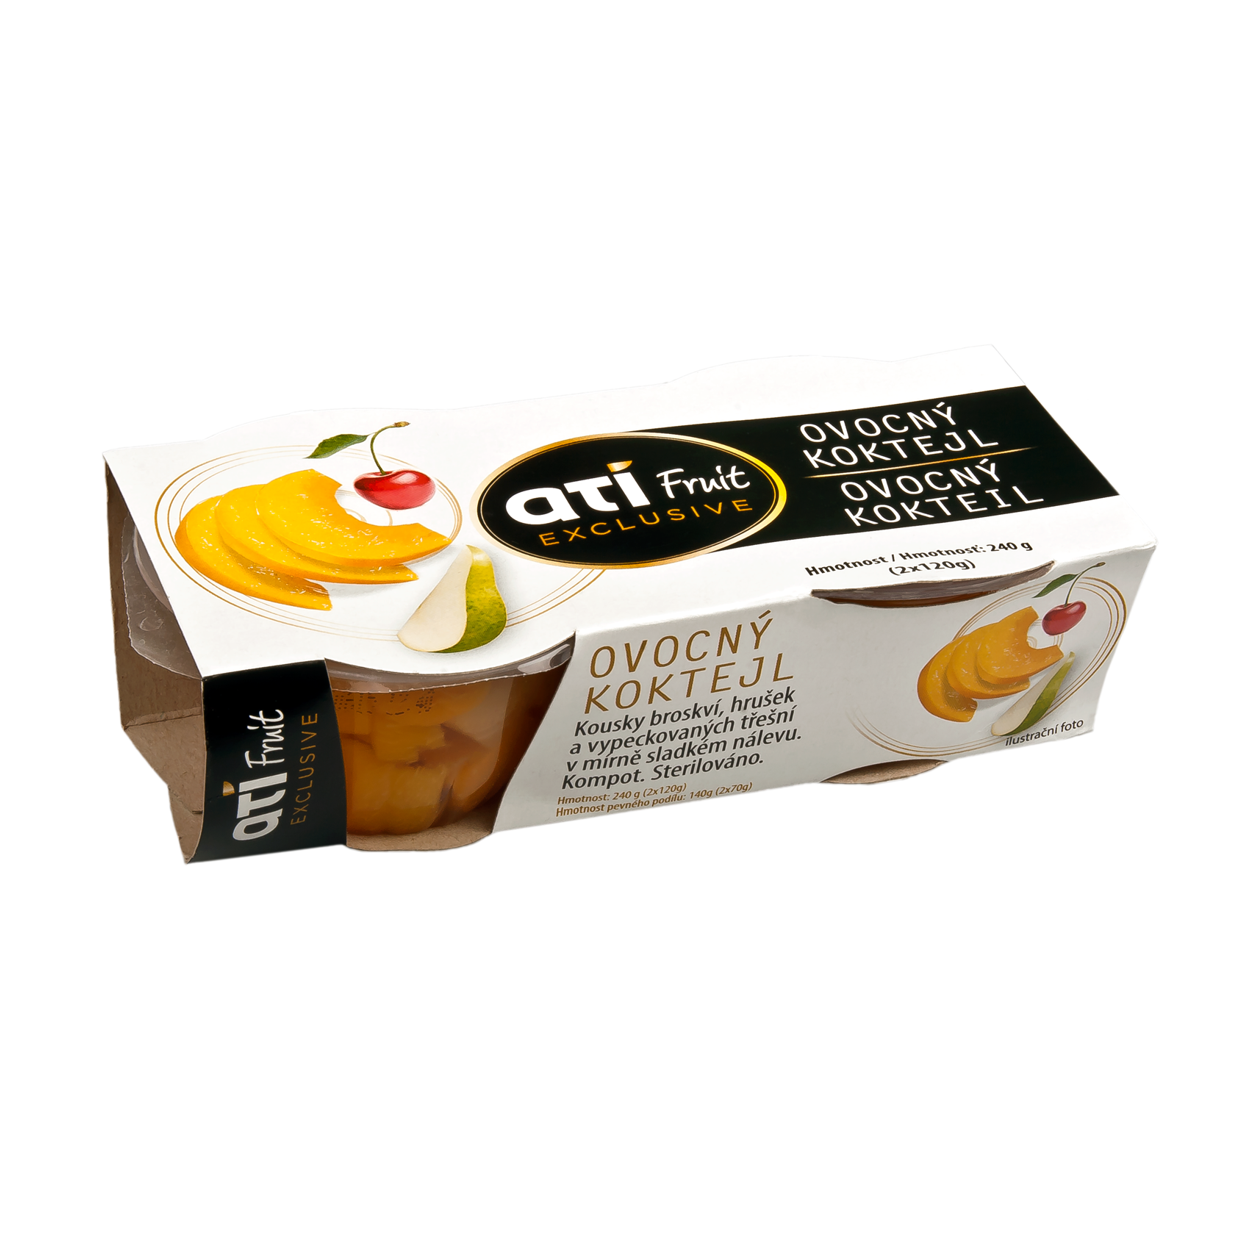 ATI Fruit Exclusive ovocný koktejl 2 pack